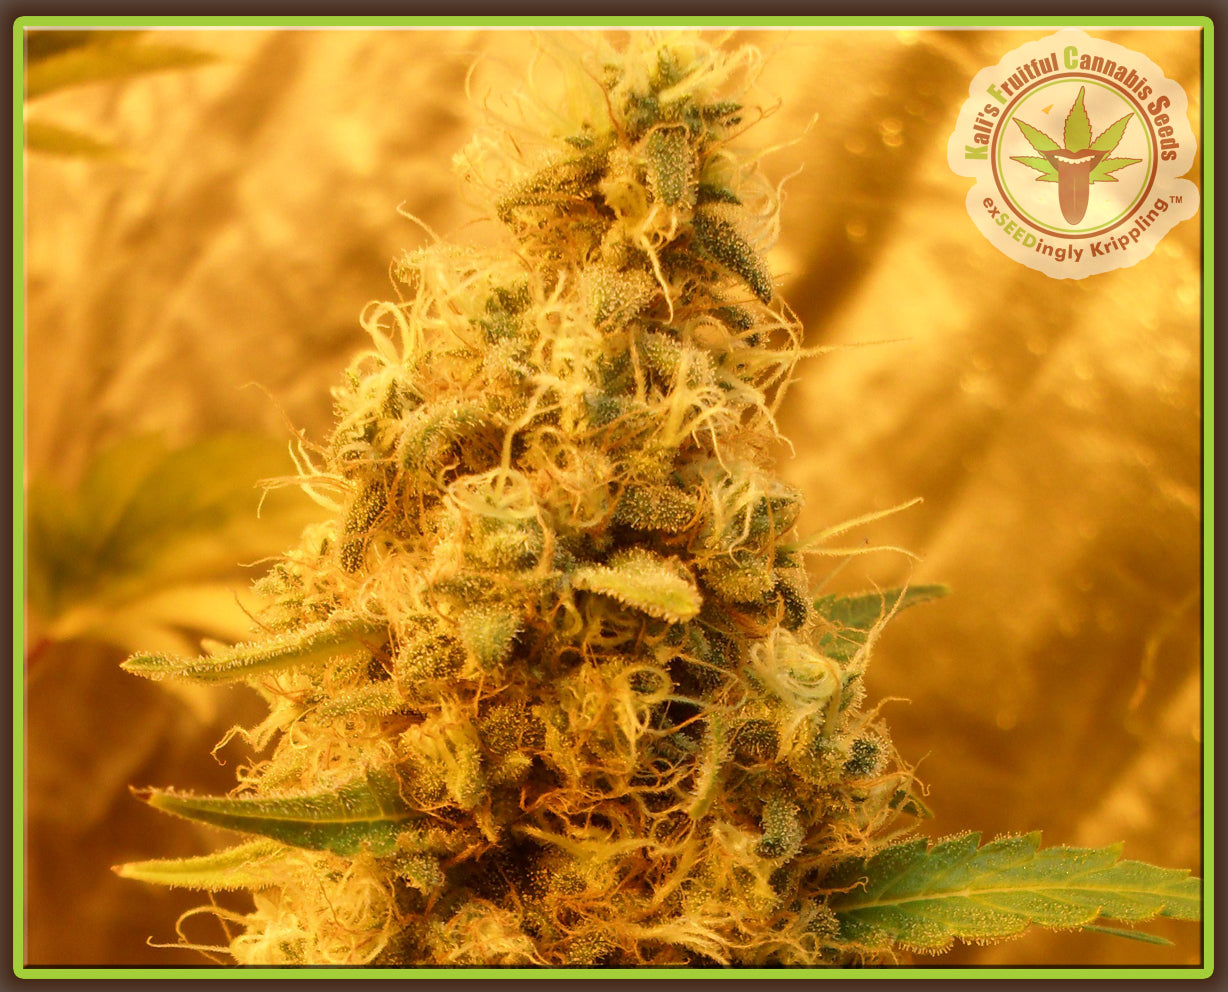 Kali_s_Fruitful_Cannabis_Jack_Mist_Tree.jpg